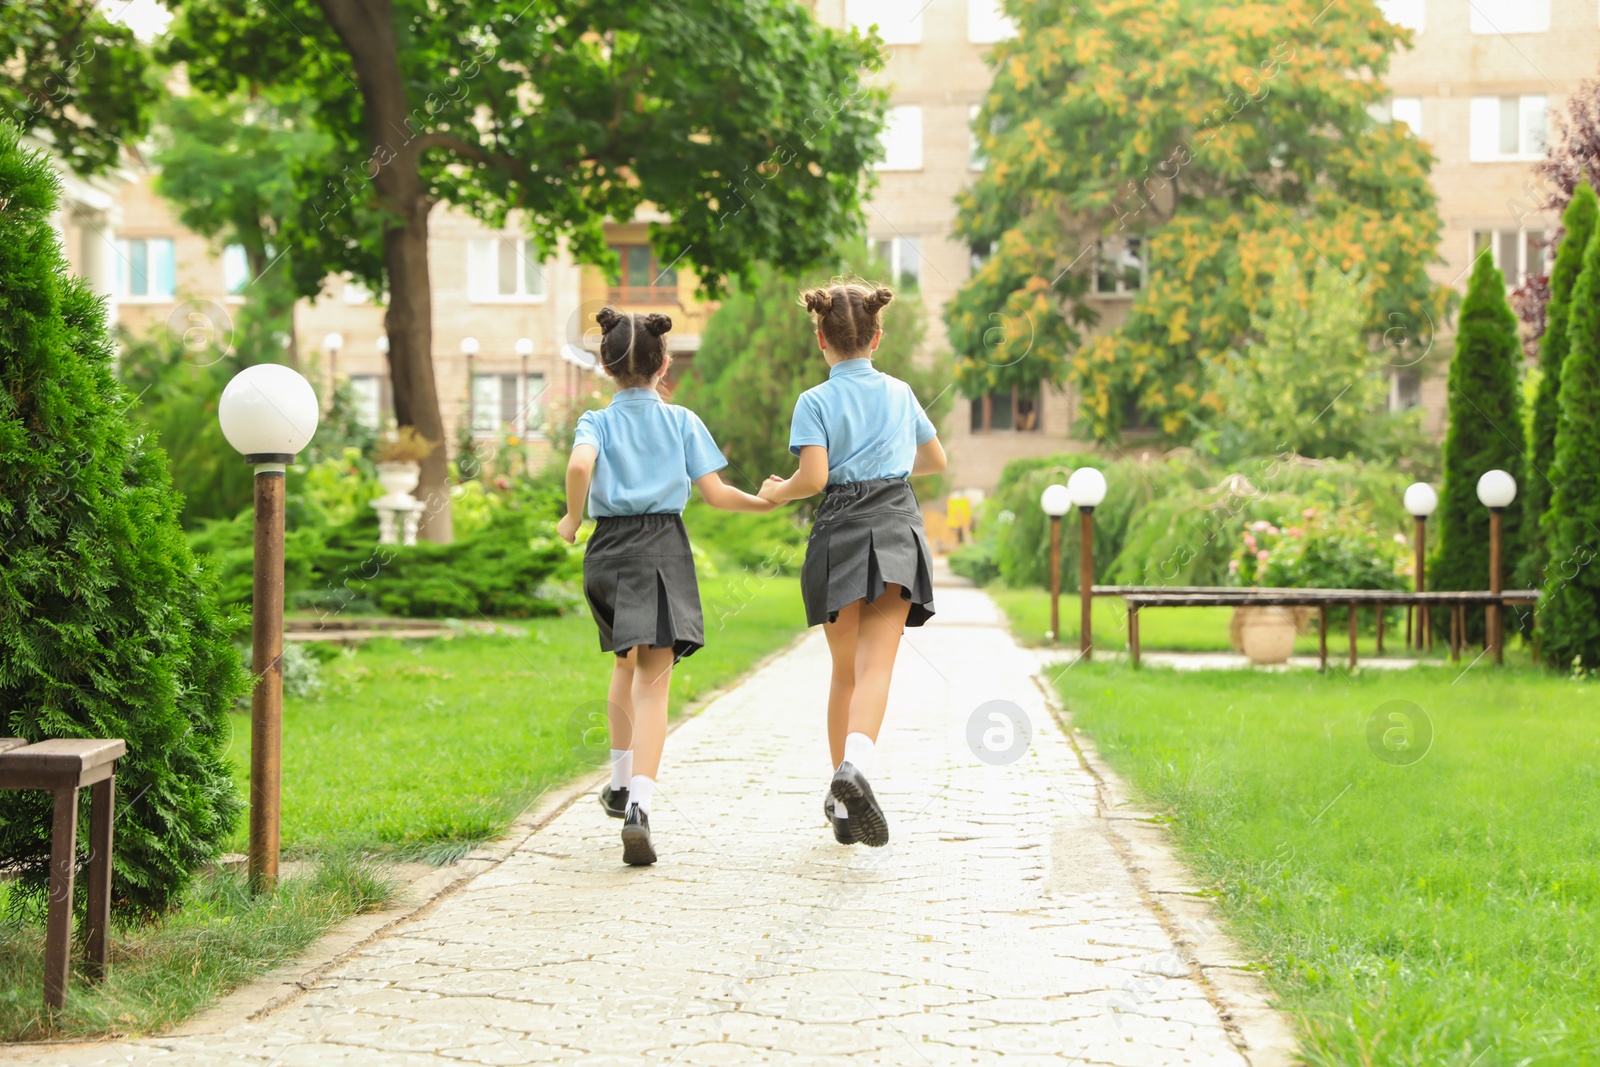 Photo of Little girls in stylish school uniform outdoors